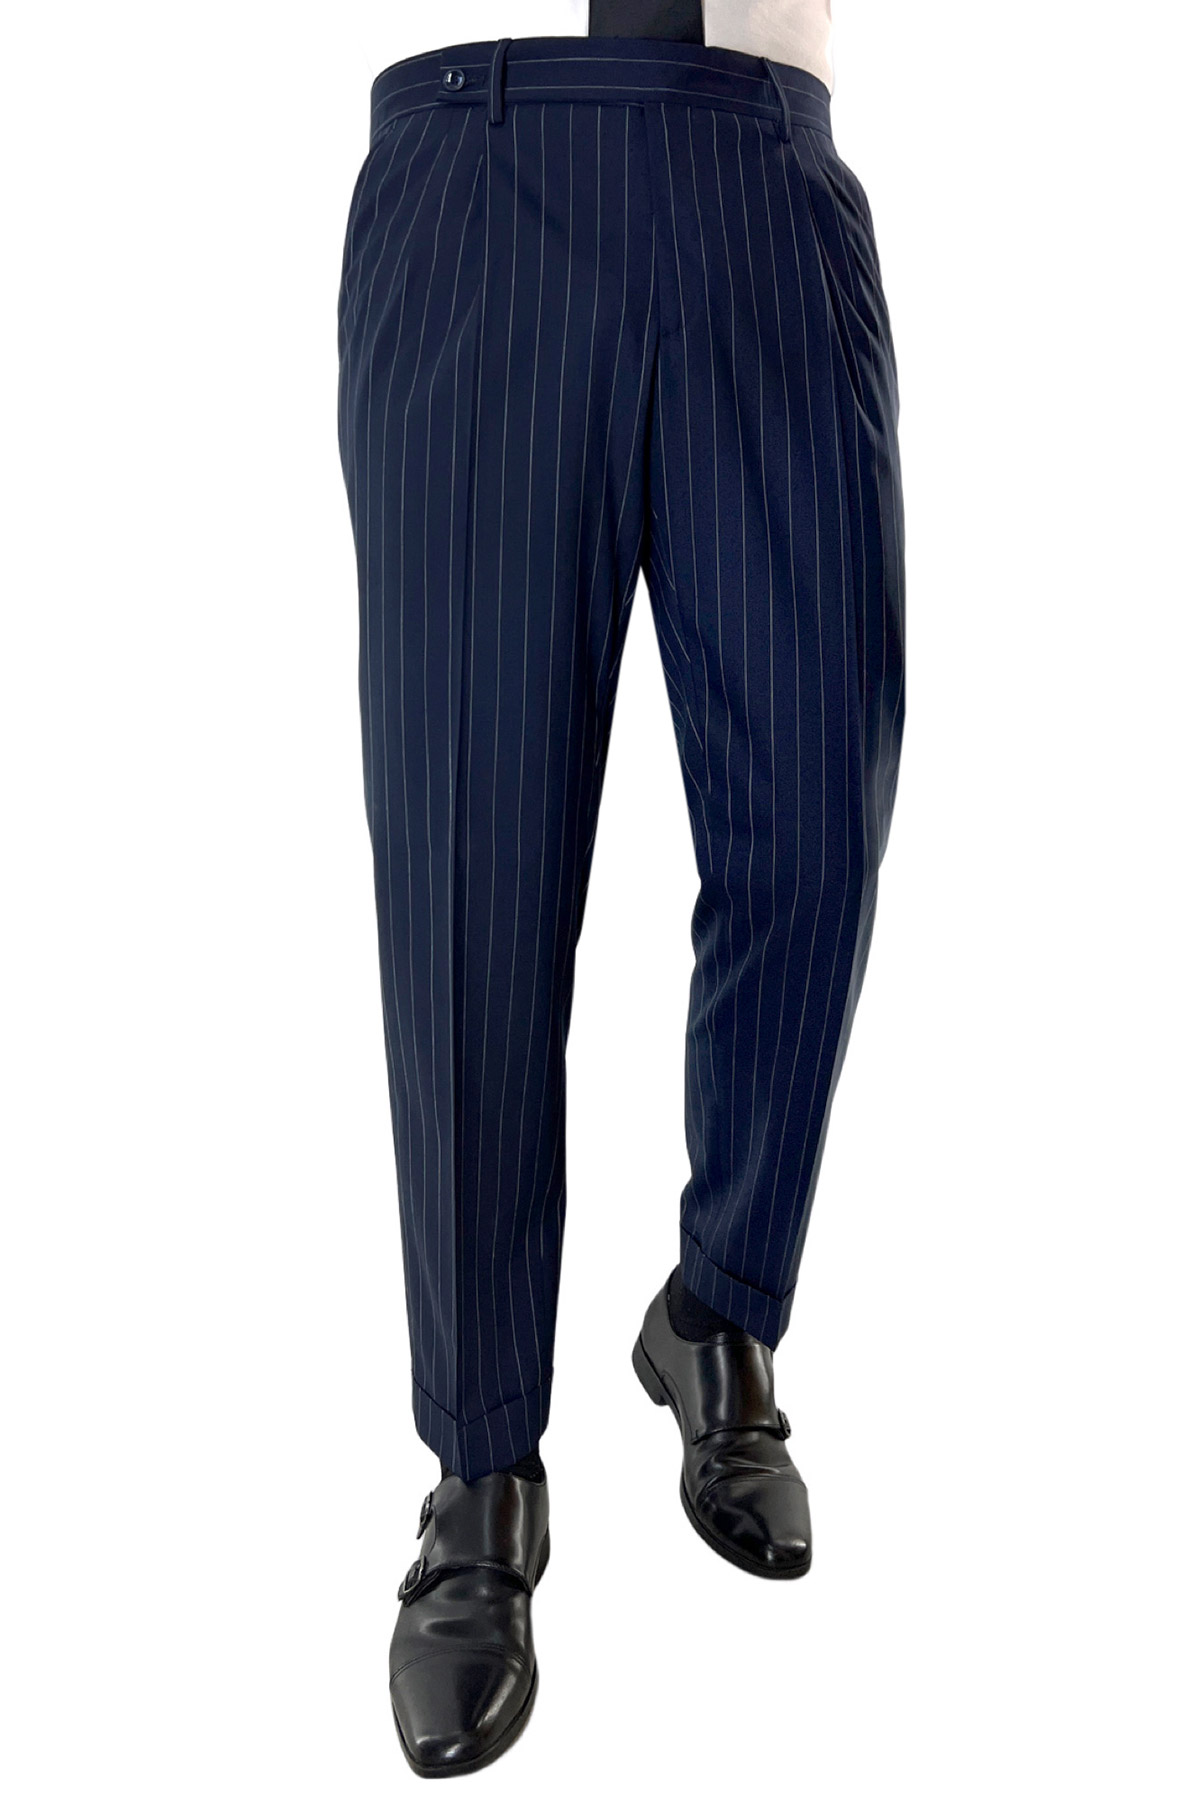 Pantalone uomo navy blu gessato bianco chiusura prolungata doppia pinces in fresco lana Holland & Sherry